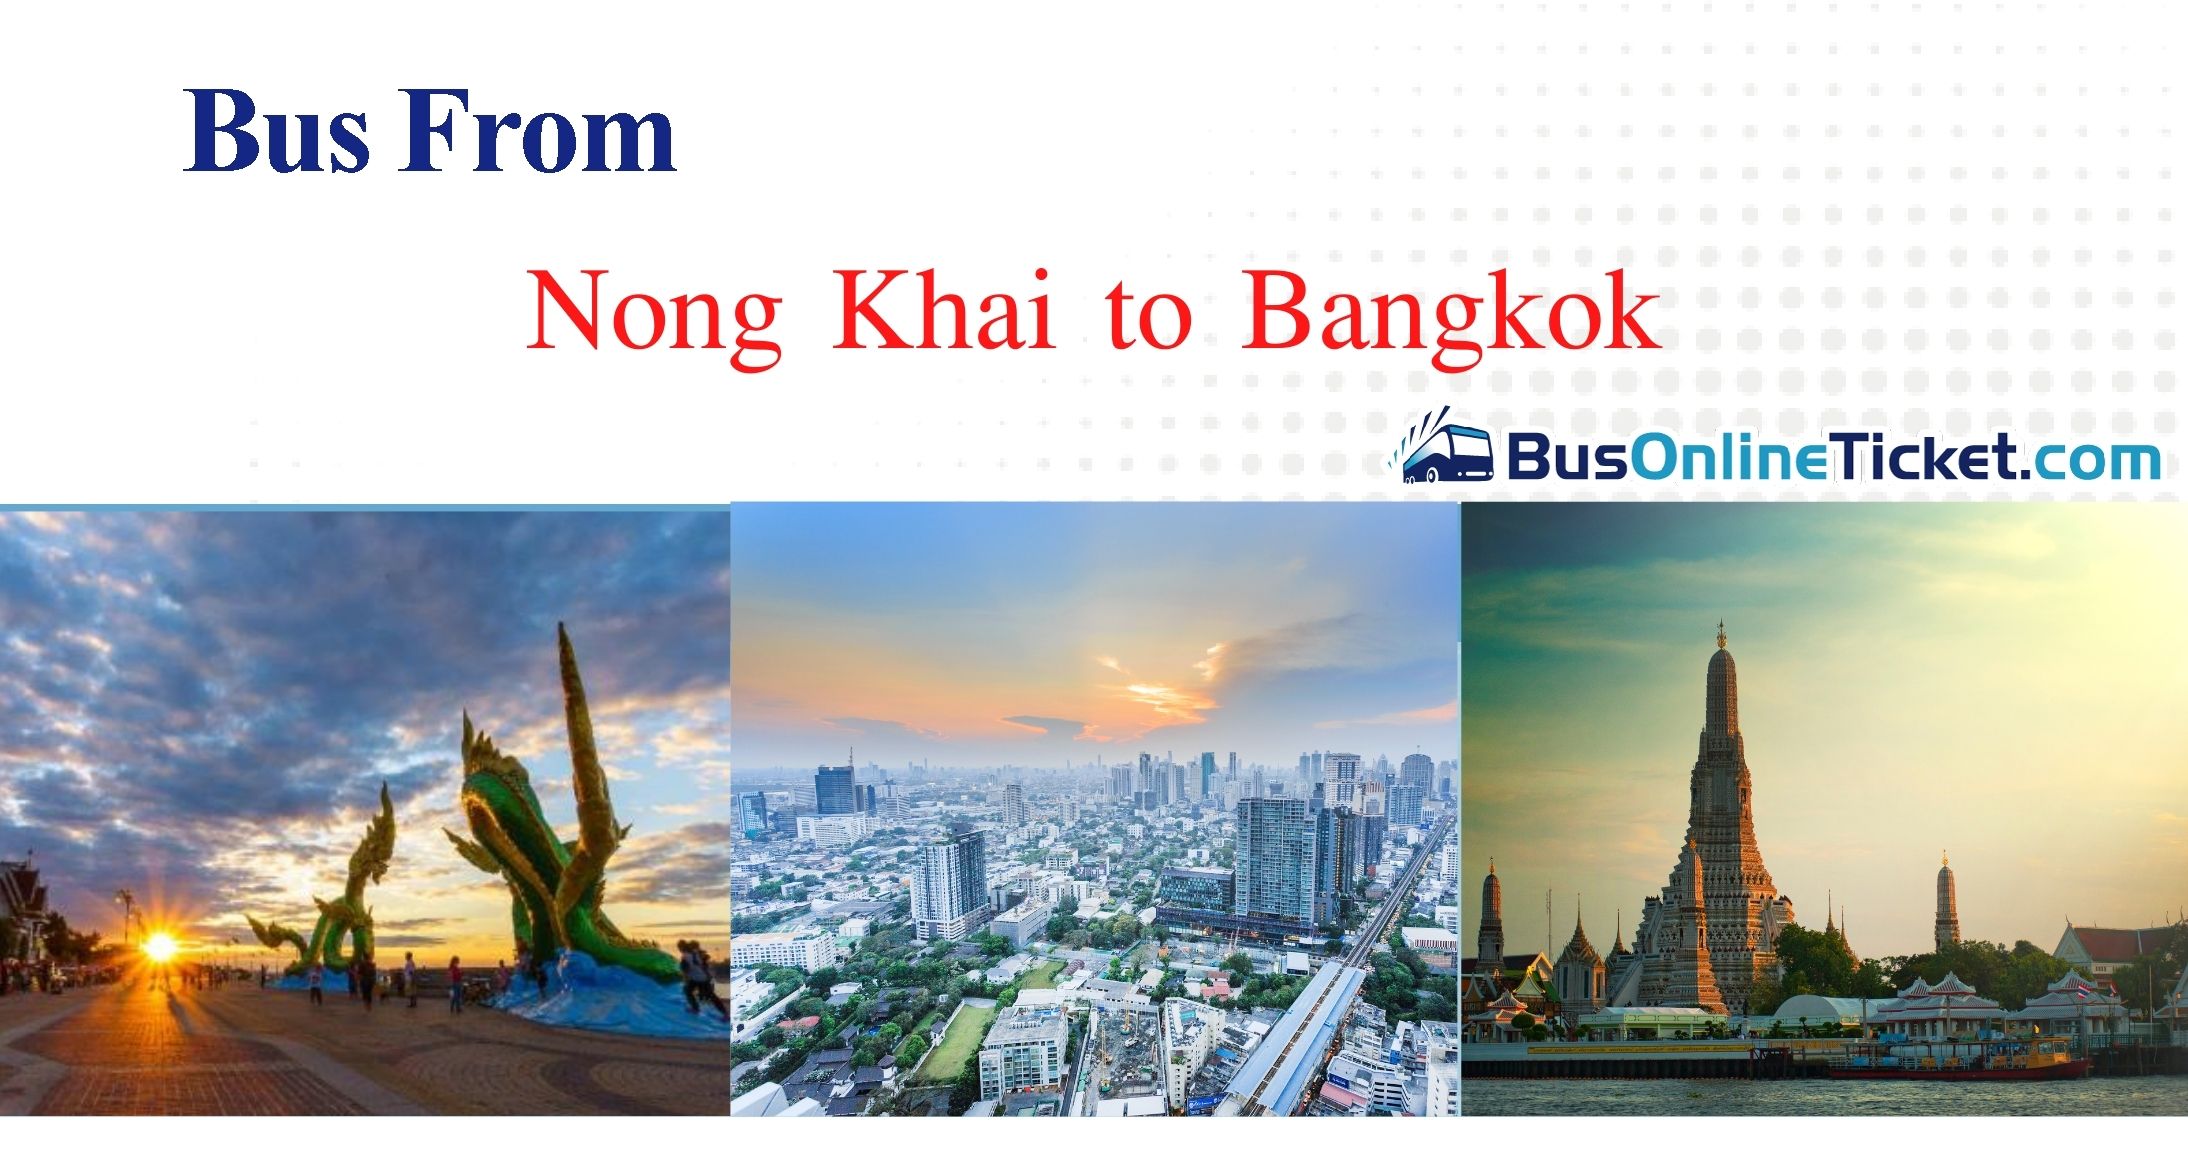 Bus from Nong Khai to Bangkok